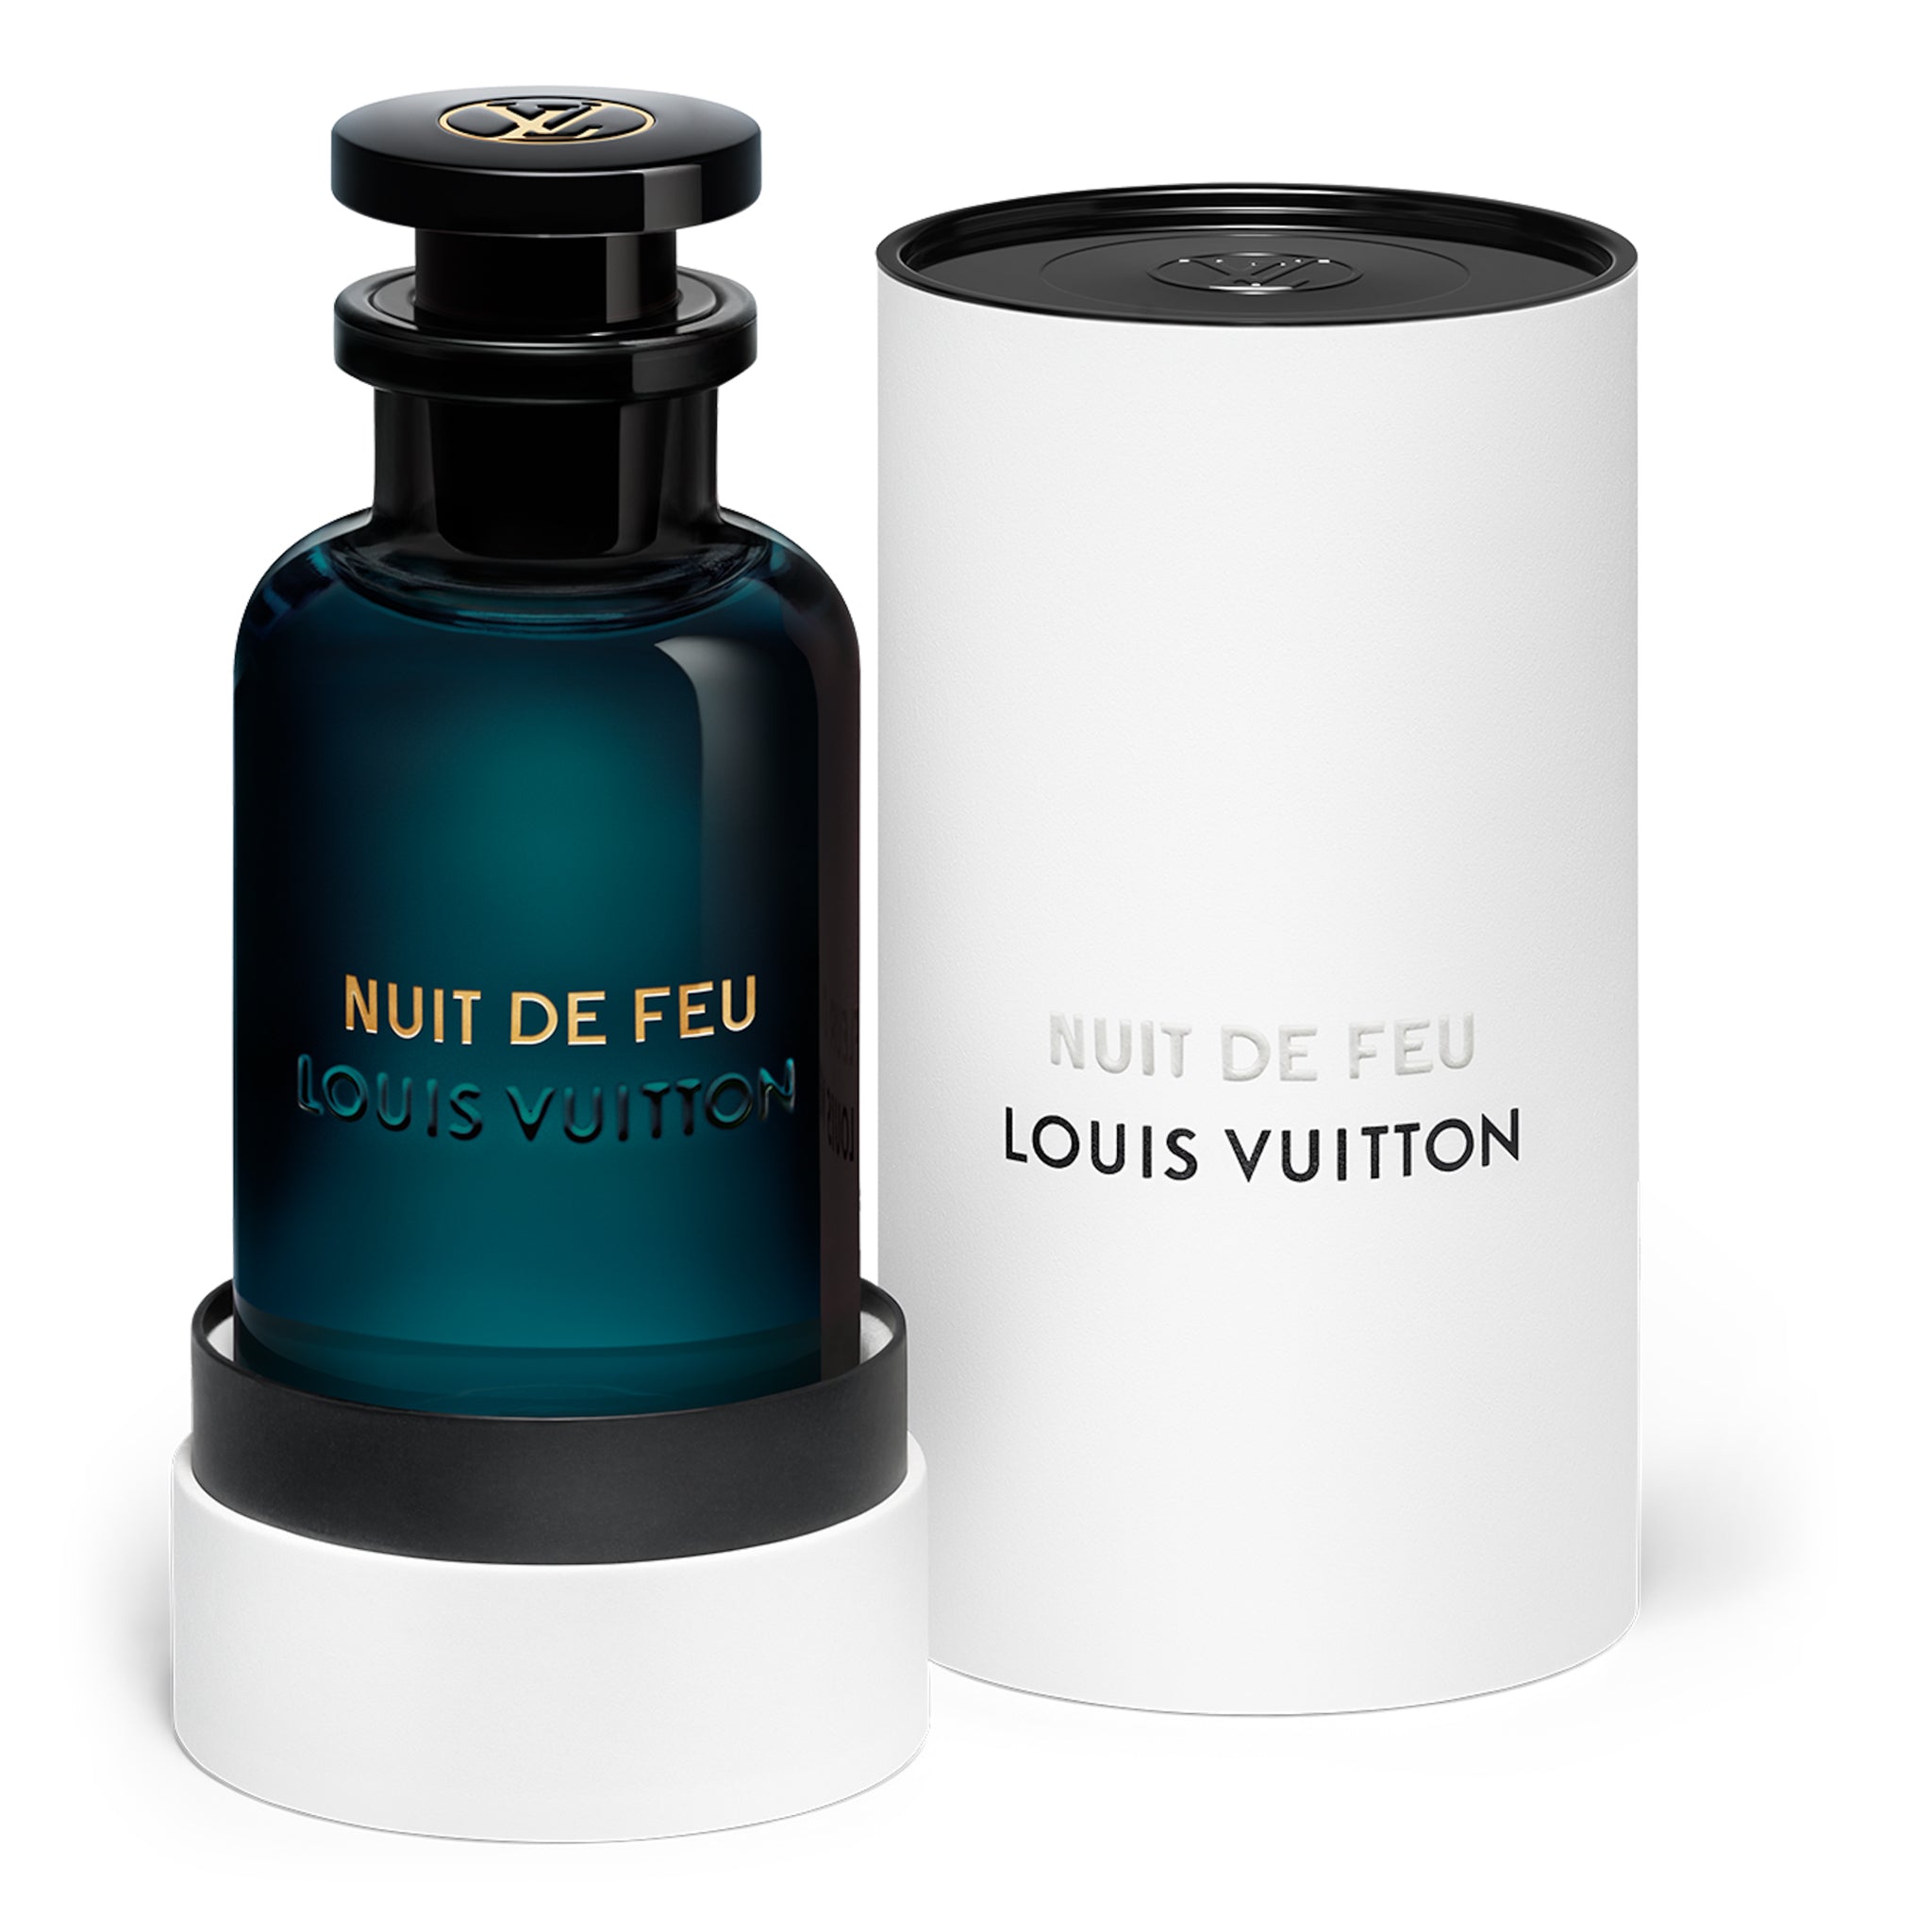 Louid Vuitton Nuit De Feu Perfume, Eau De Parfum 3.4 oz/100 ml Spray